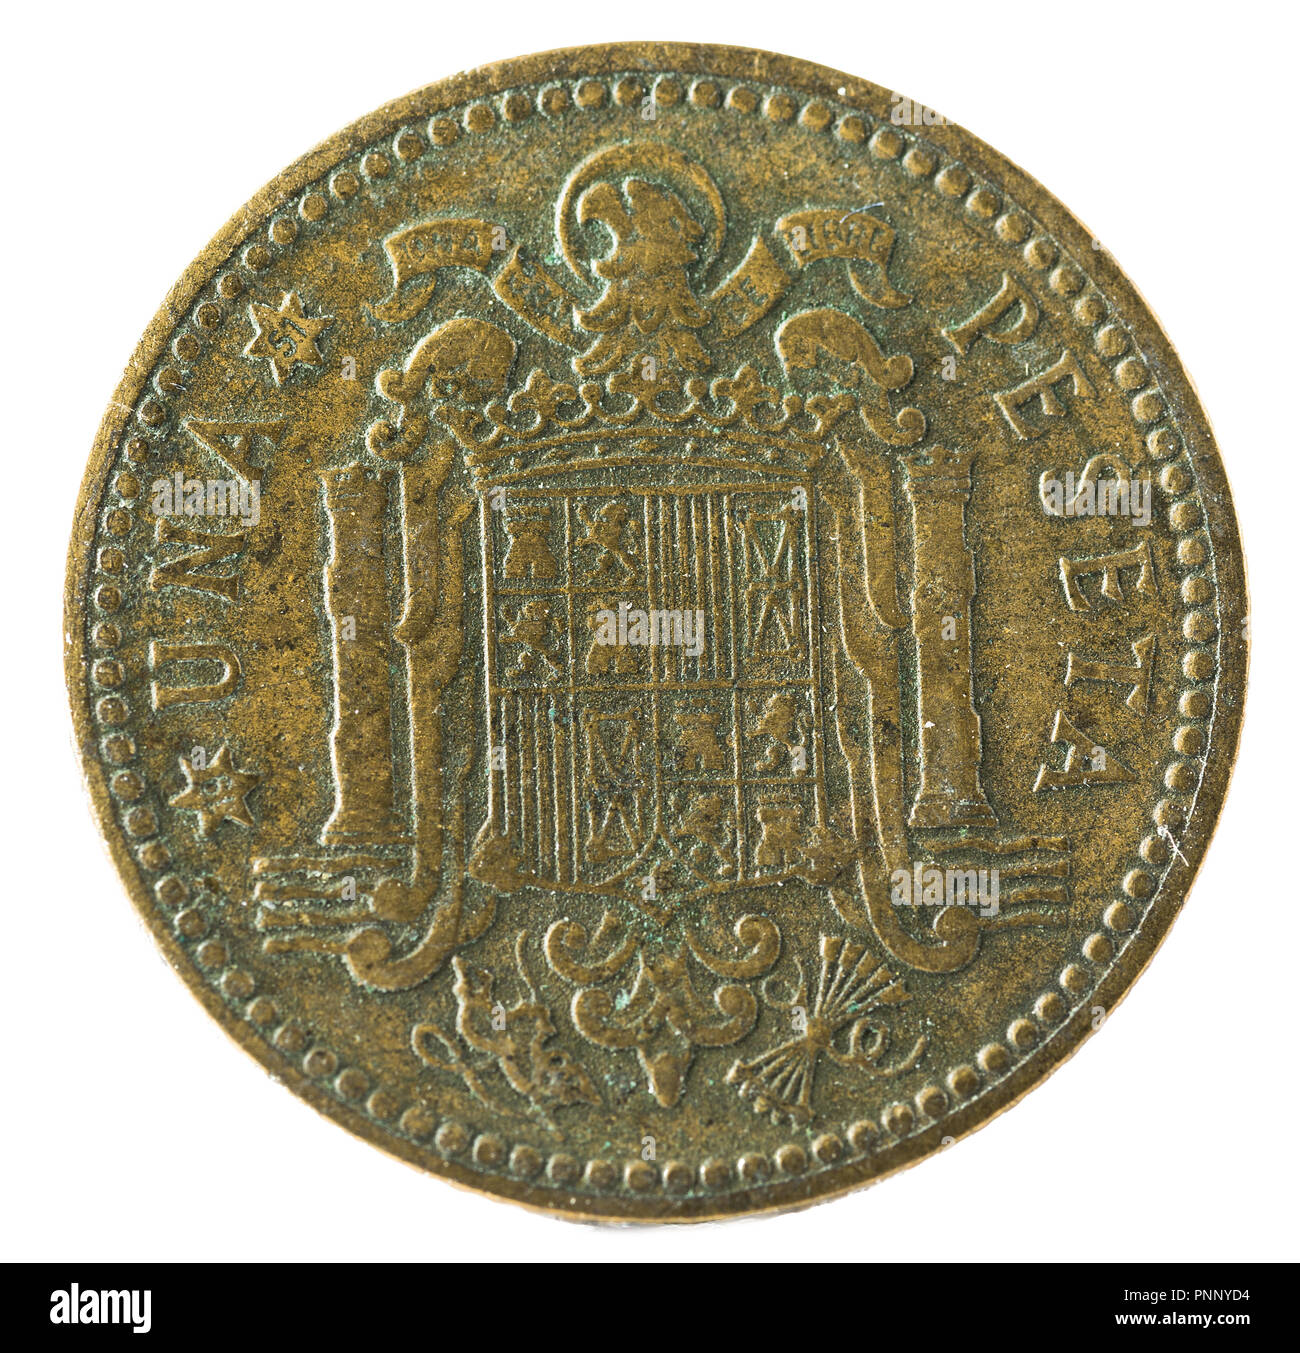 Old Spanish coin of 1 peseta, Francisco Franco. Year 1947, 19 51 in the stars. Reverse. Stock Photo